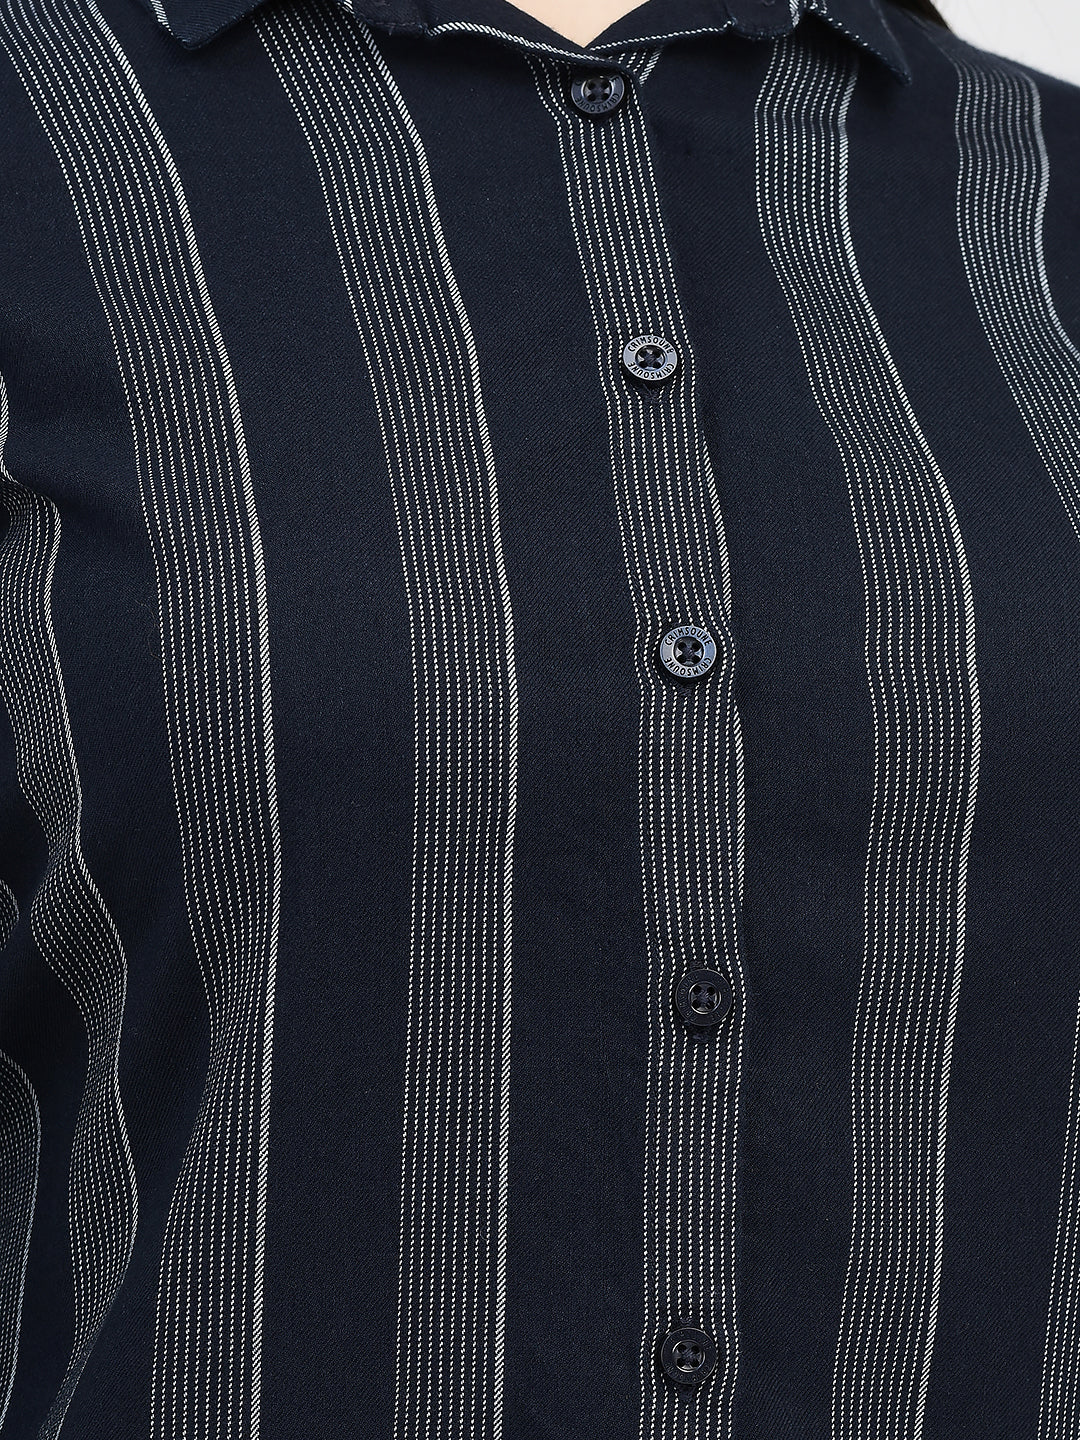 Vertical Striped Navy Blue Longline Shirt